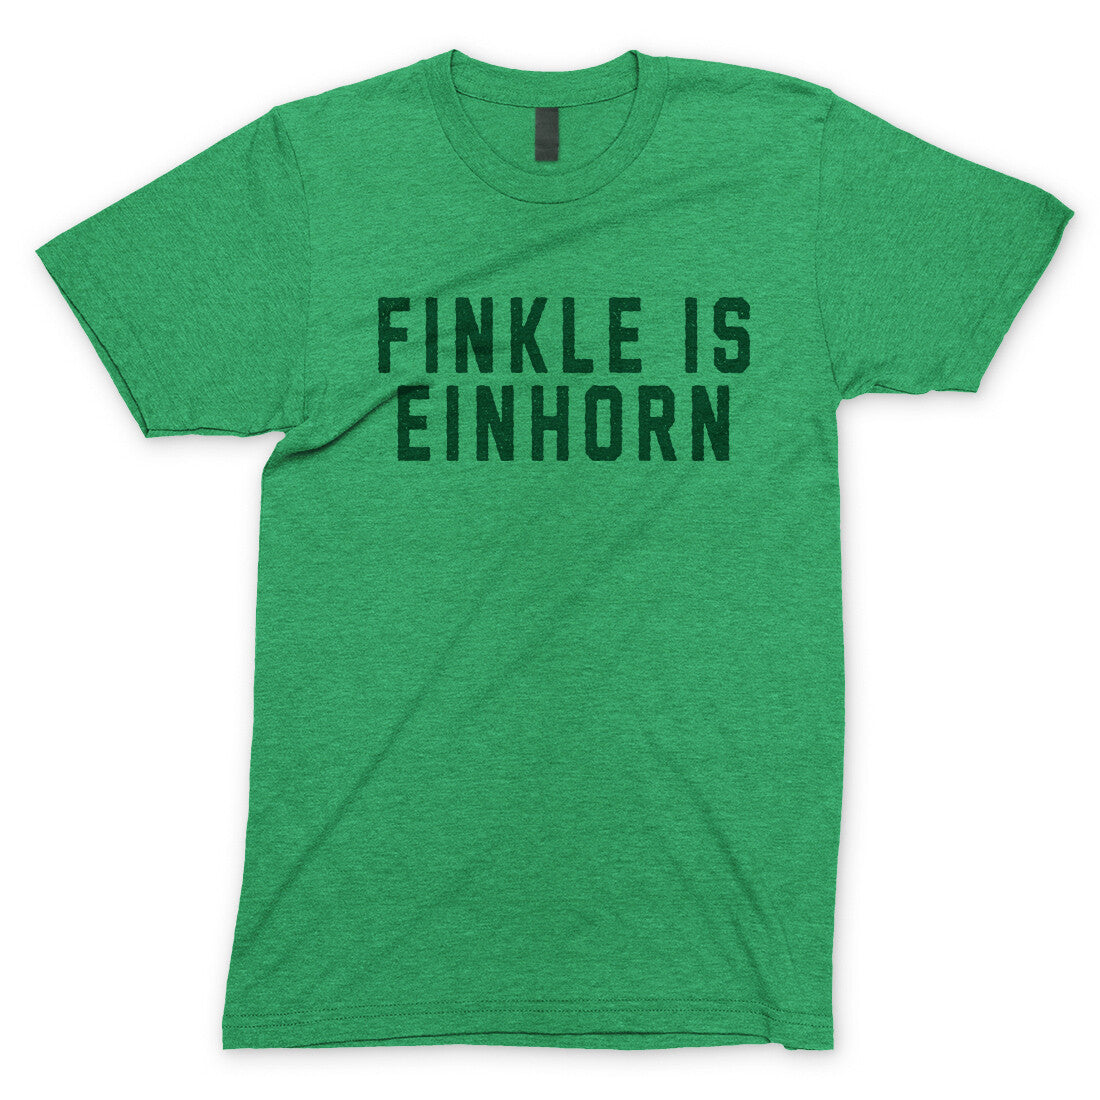 Finkle is Einhorn in Heather Irish Green Color